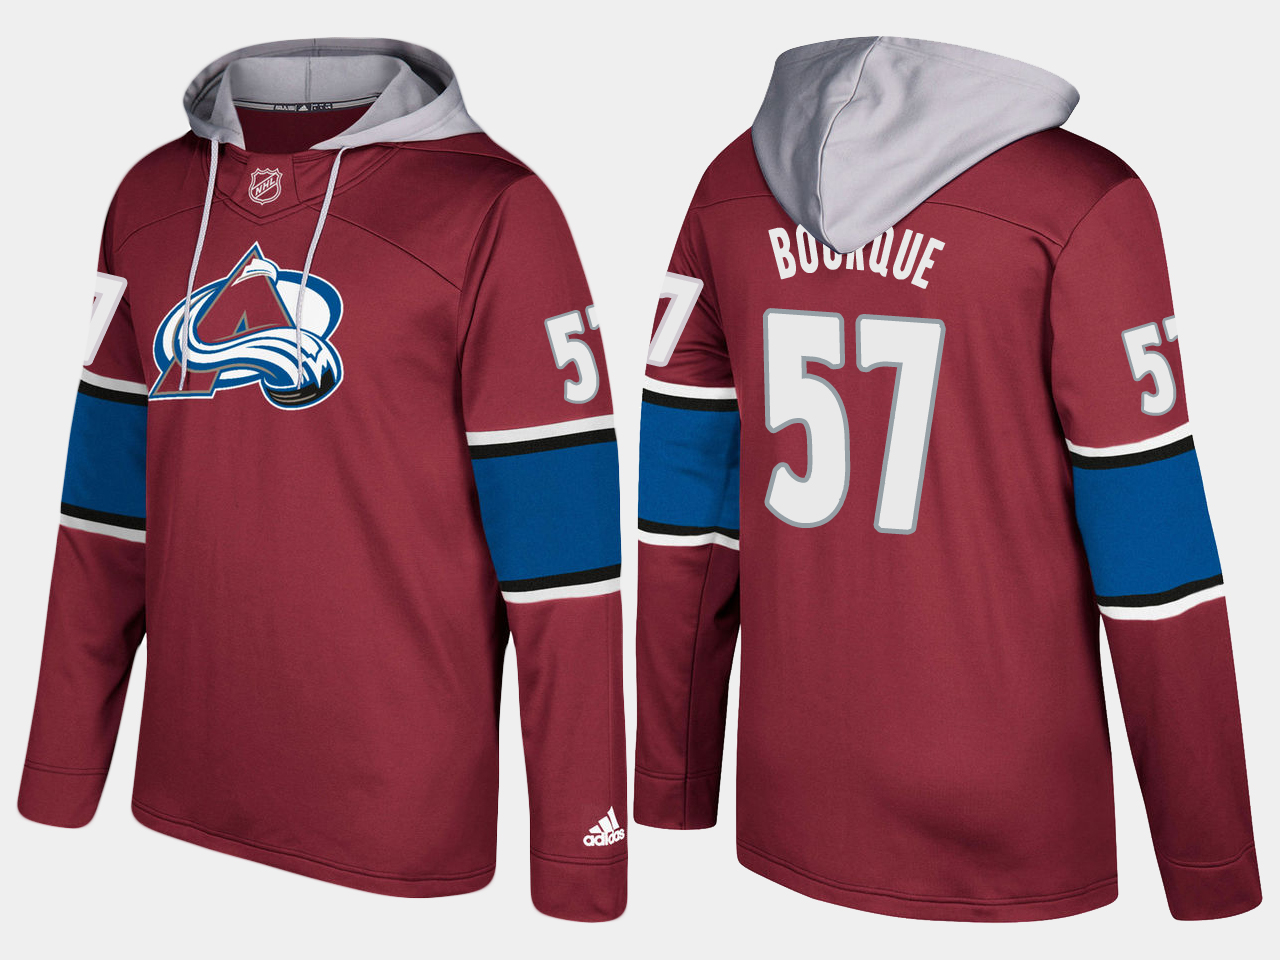 Men NHL Colorado avalanche #57 gabriel bourque burgundy hoodie